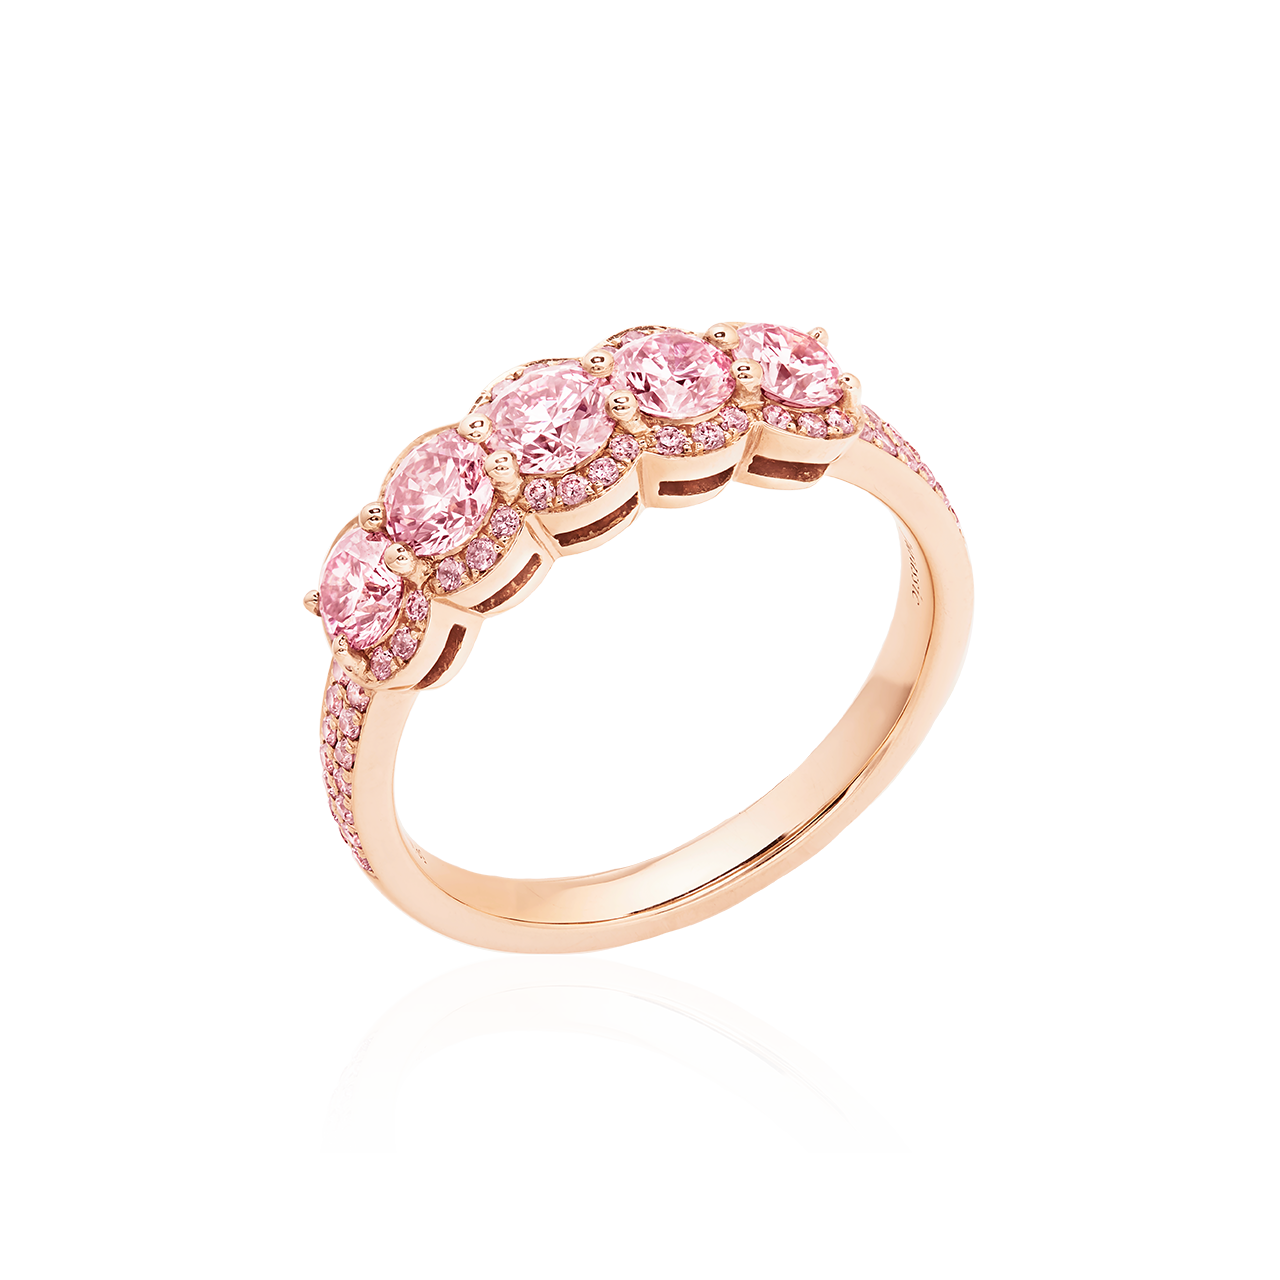 0.95克拉 阿蓋爾粉鑽戒
Pink Diamond from Argyle Mine
and Diamond Ring